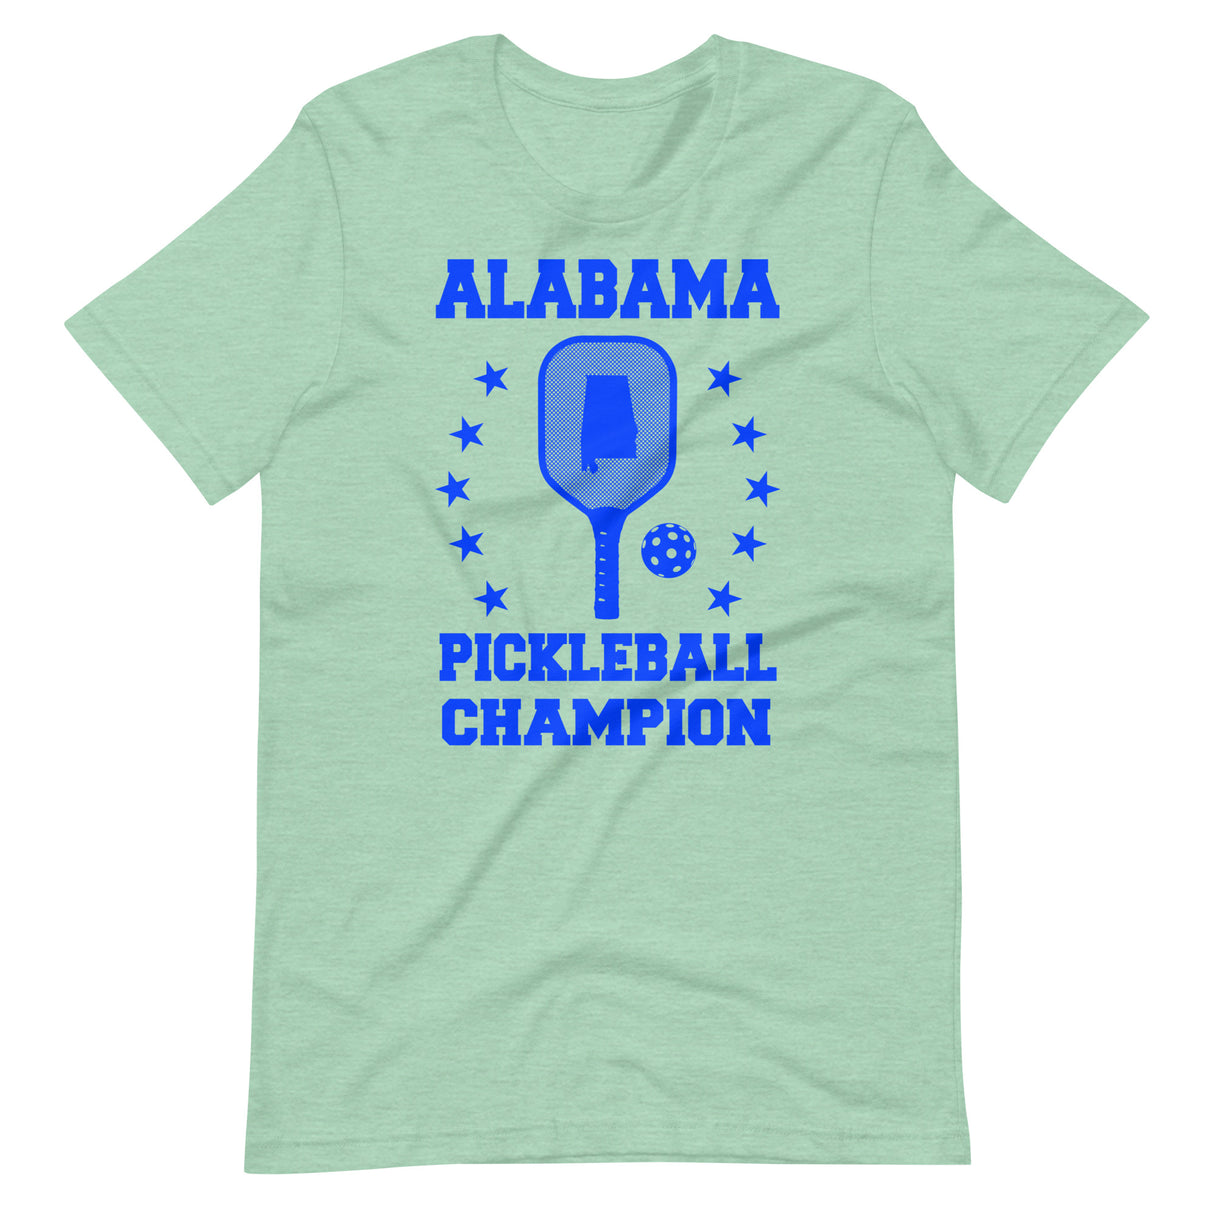 Alabama Pickleball Champion Shirt